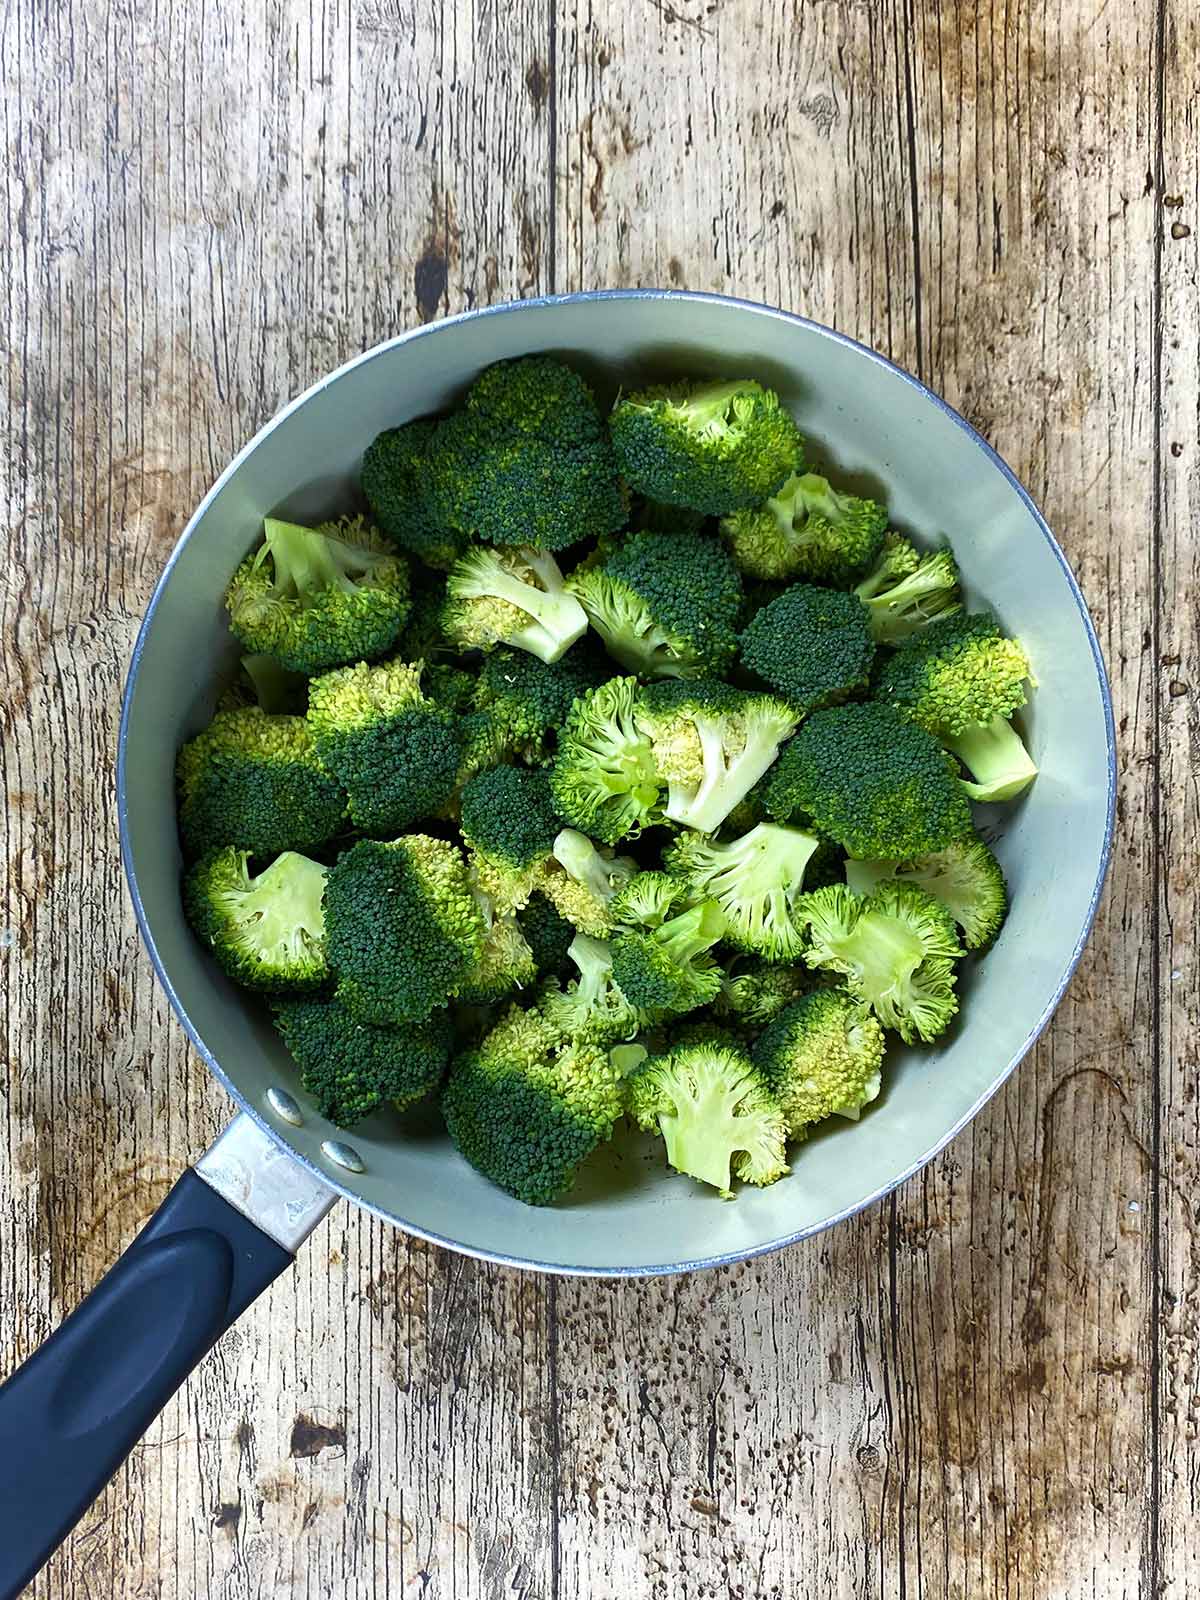 A pan of broccoli florets.